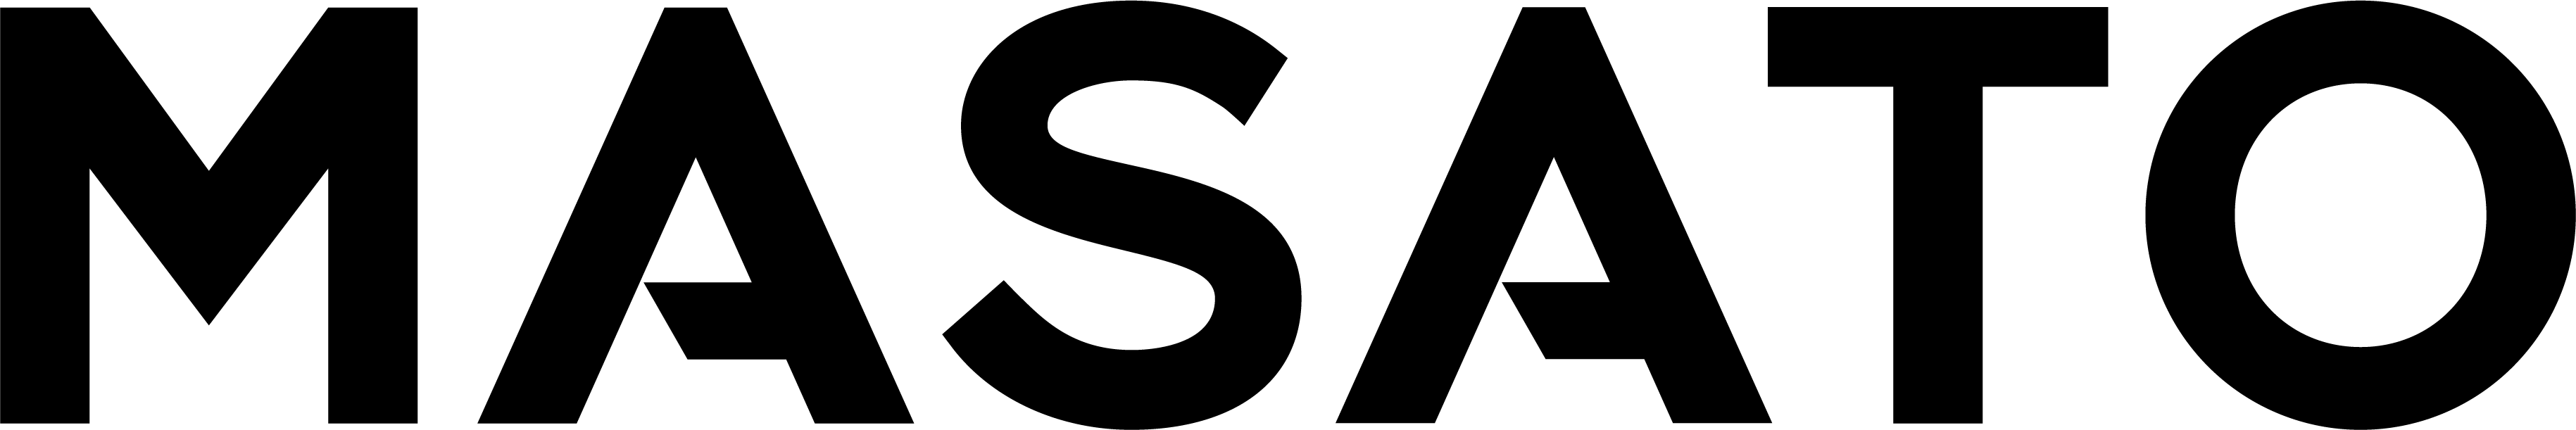 Masato clothing brand logo